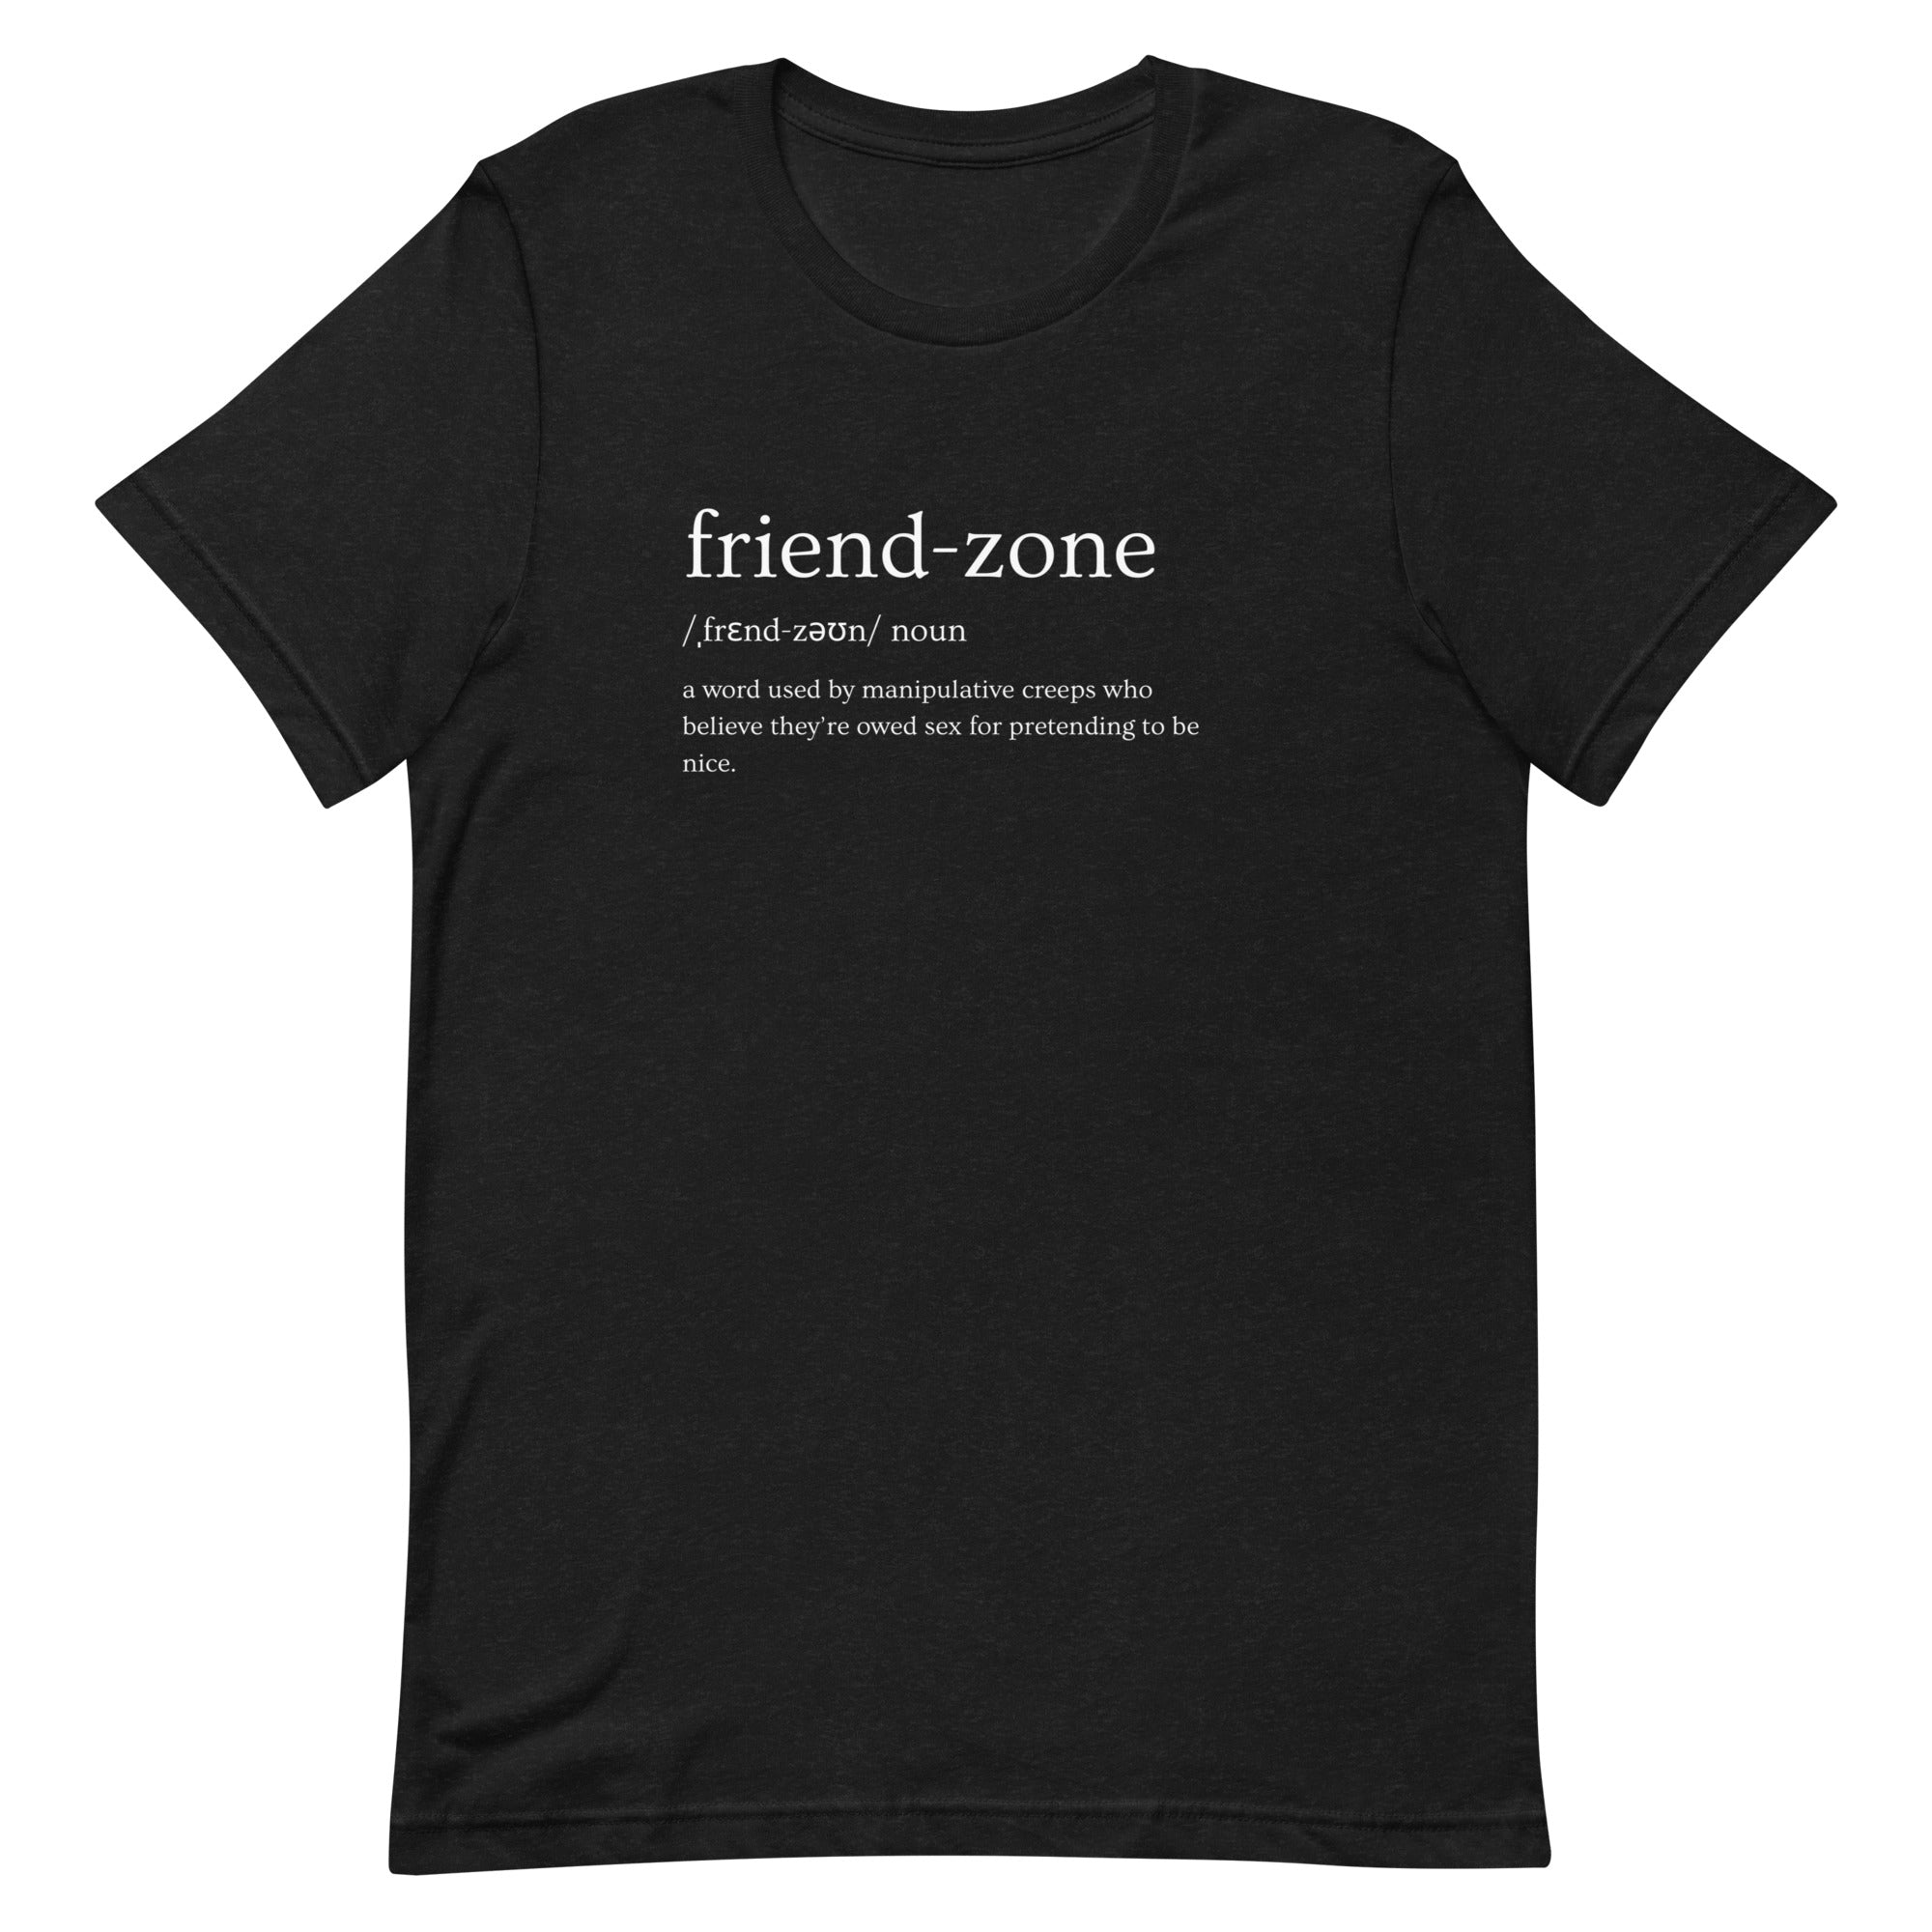 Friend-zone Definition unisex Feminist t-shirt - Shop Women’s Rights T-shirts - Black 